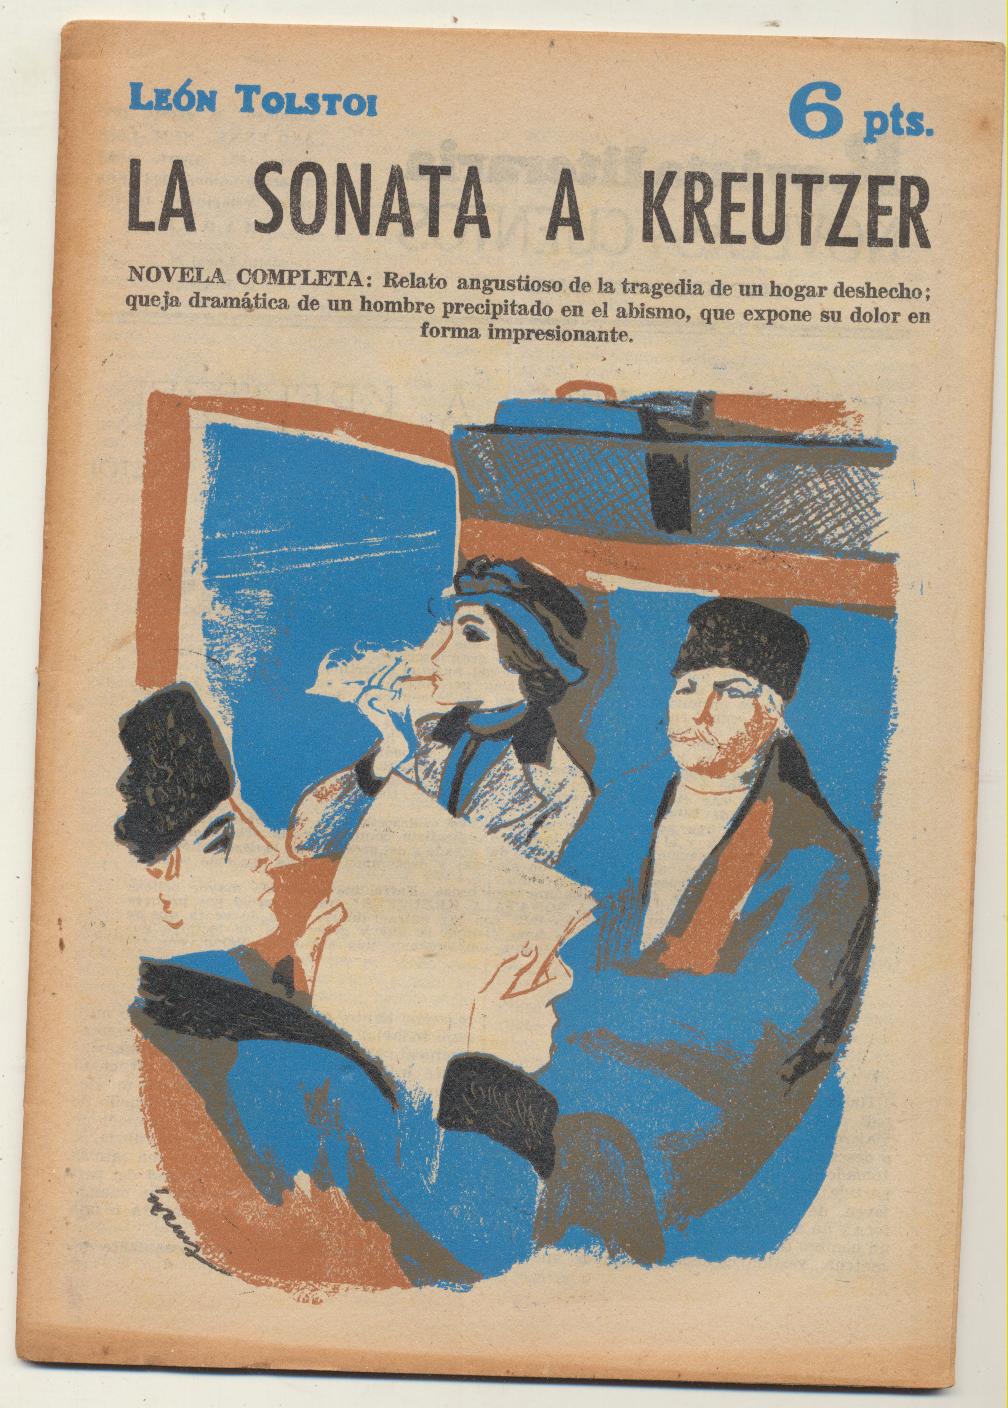 La Sonata a Kreutzer. Leon Tolstoi. Revista Literaria. Novelas y Cuentos nº 1685